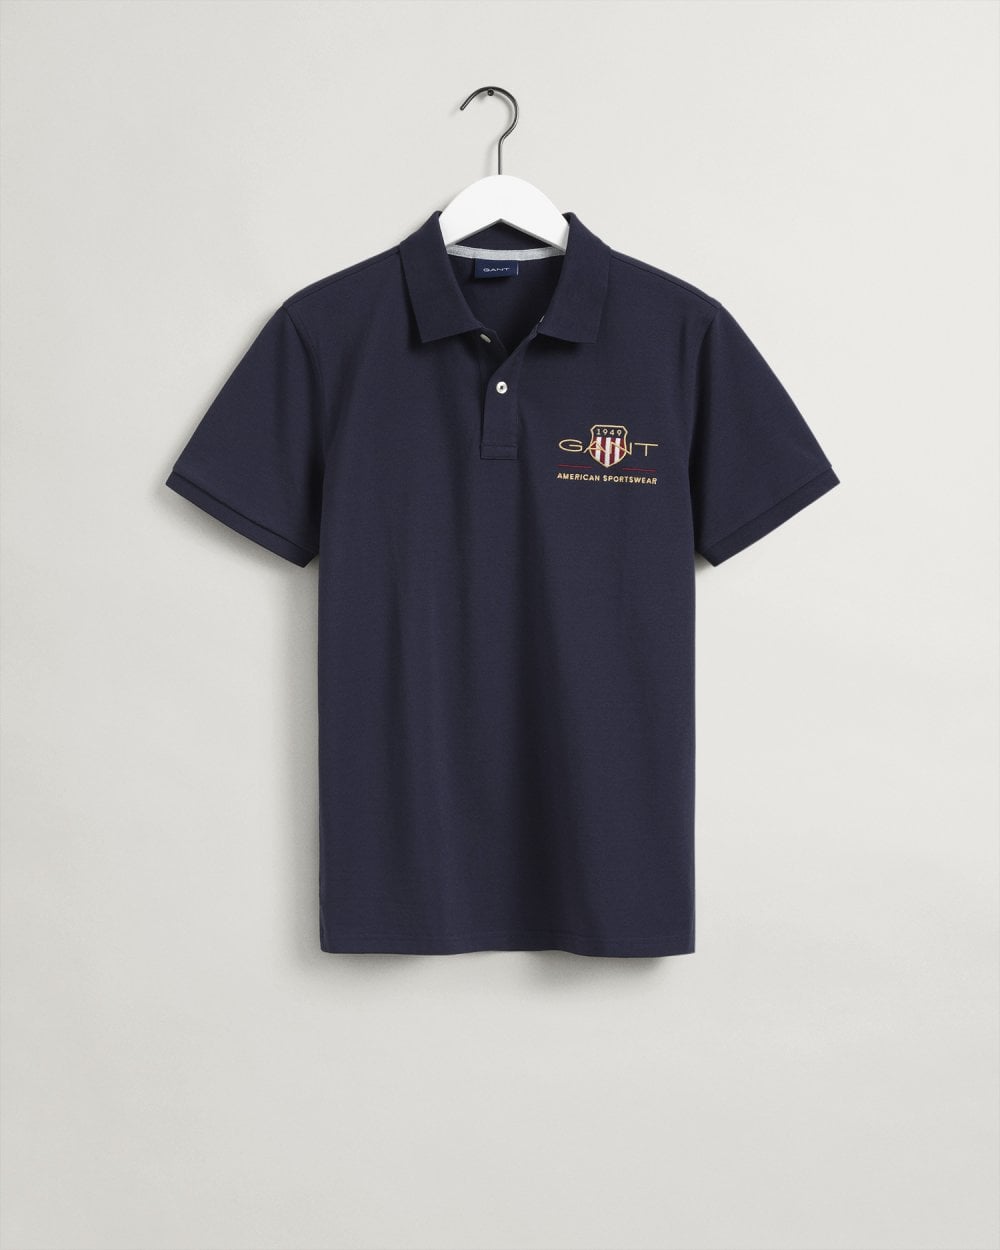 Archive Shield Pique Polo Shirt